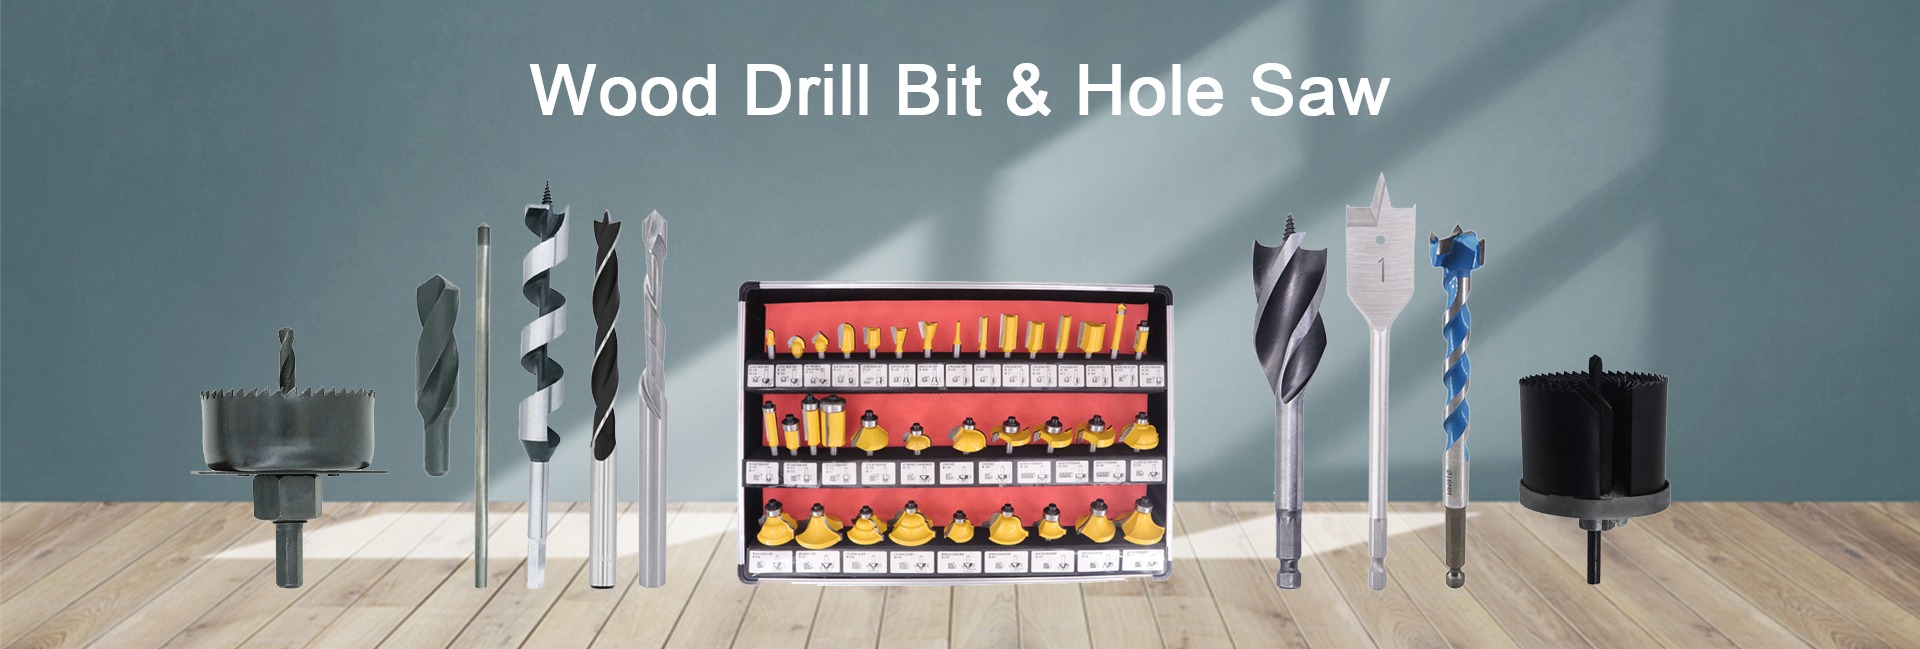 LD Drills Woodworking Tools Series